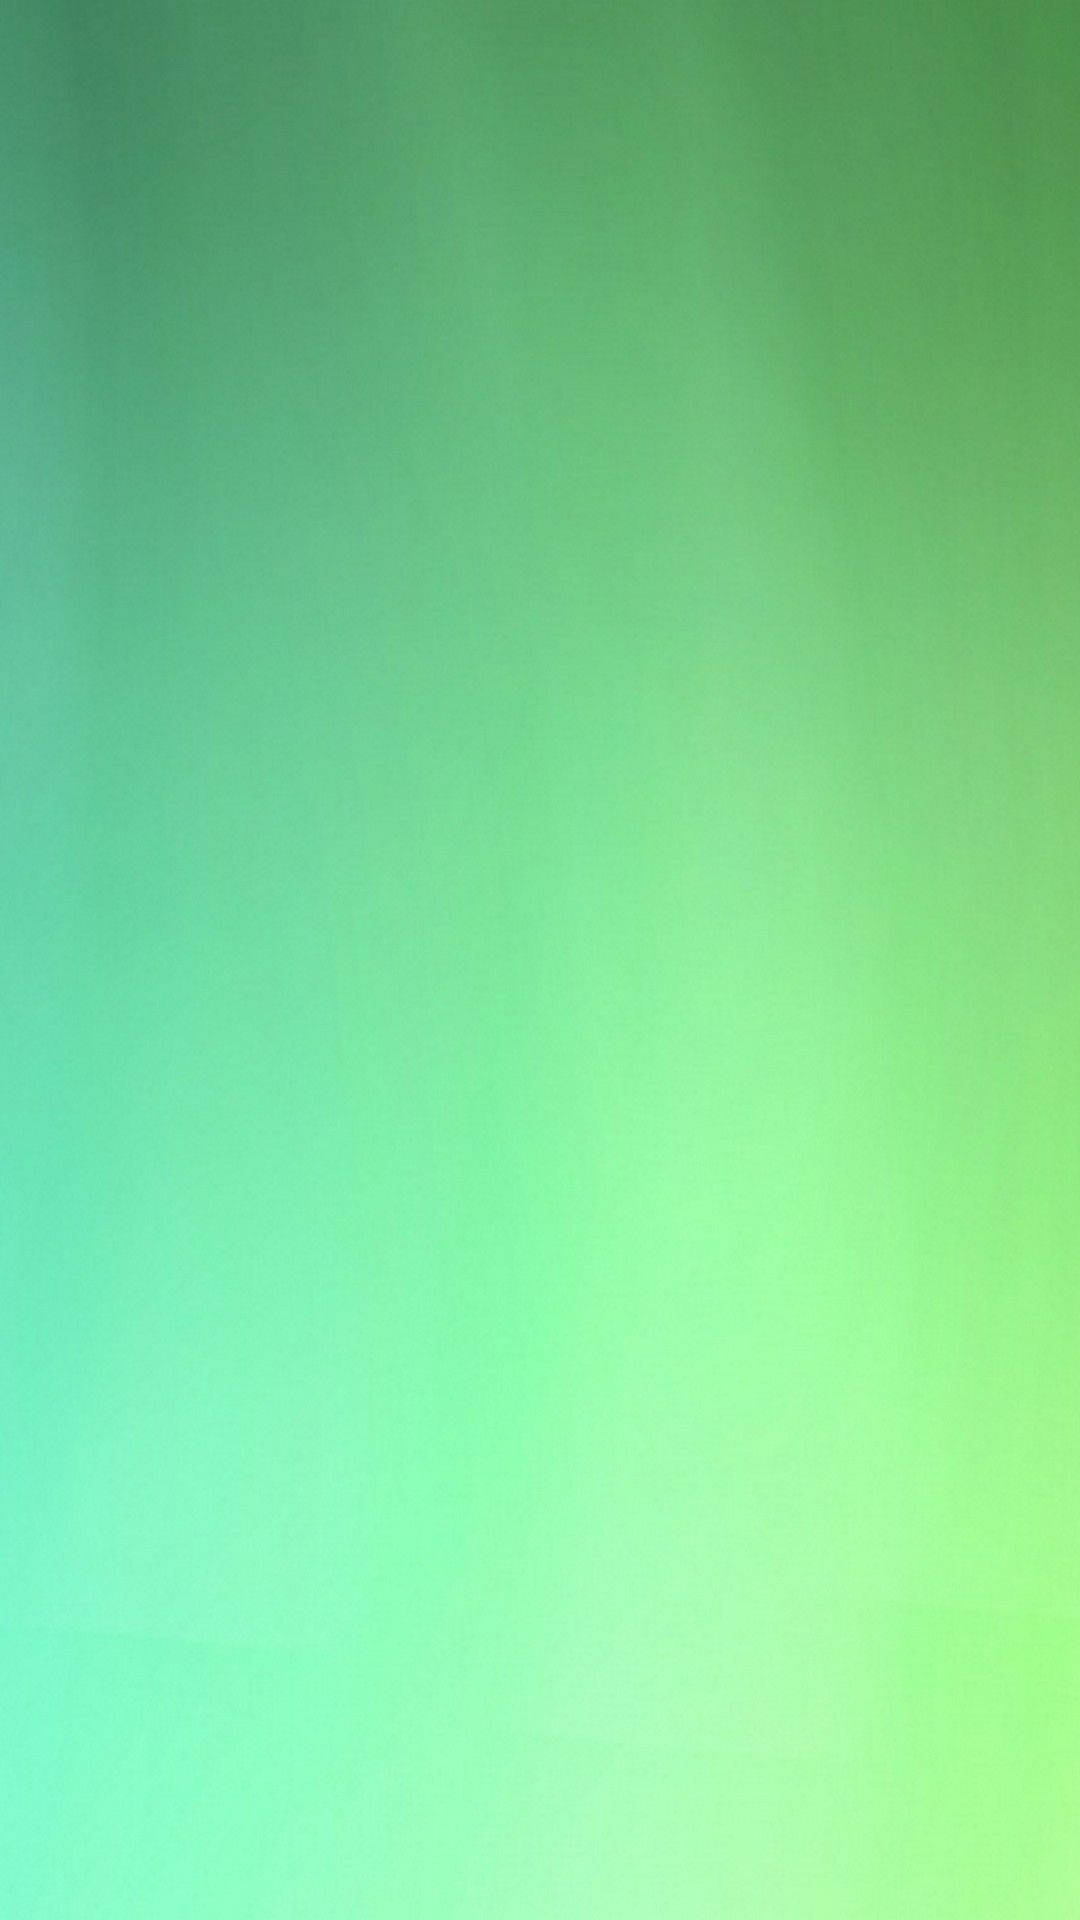 Light Green Gradient Phone Wallpaper